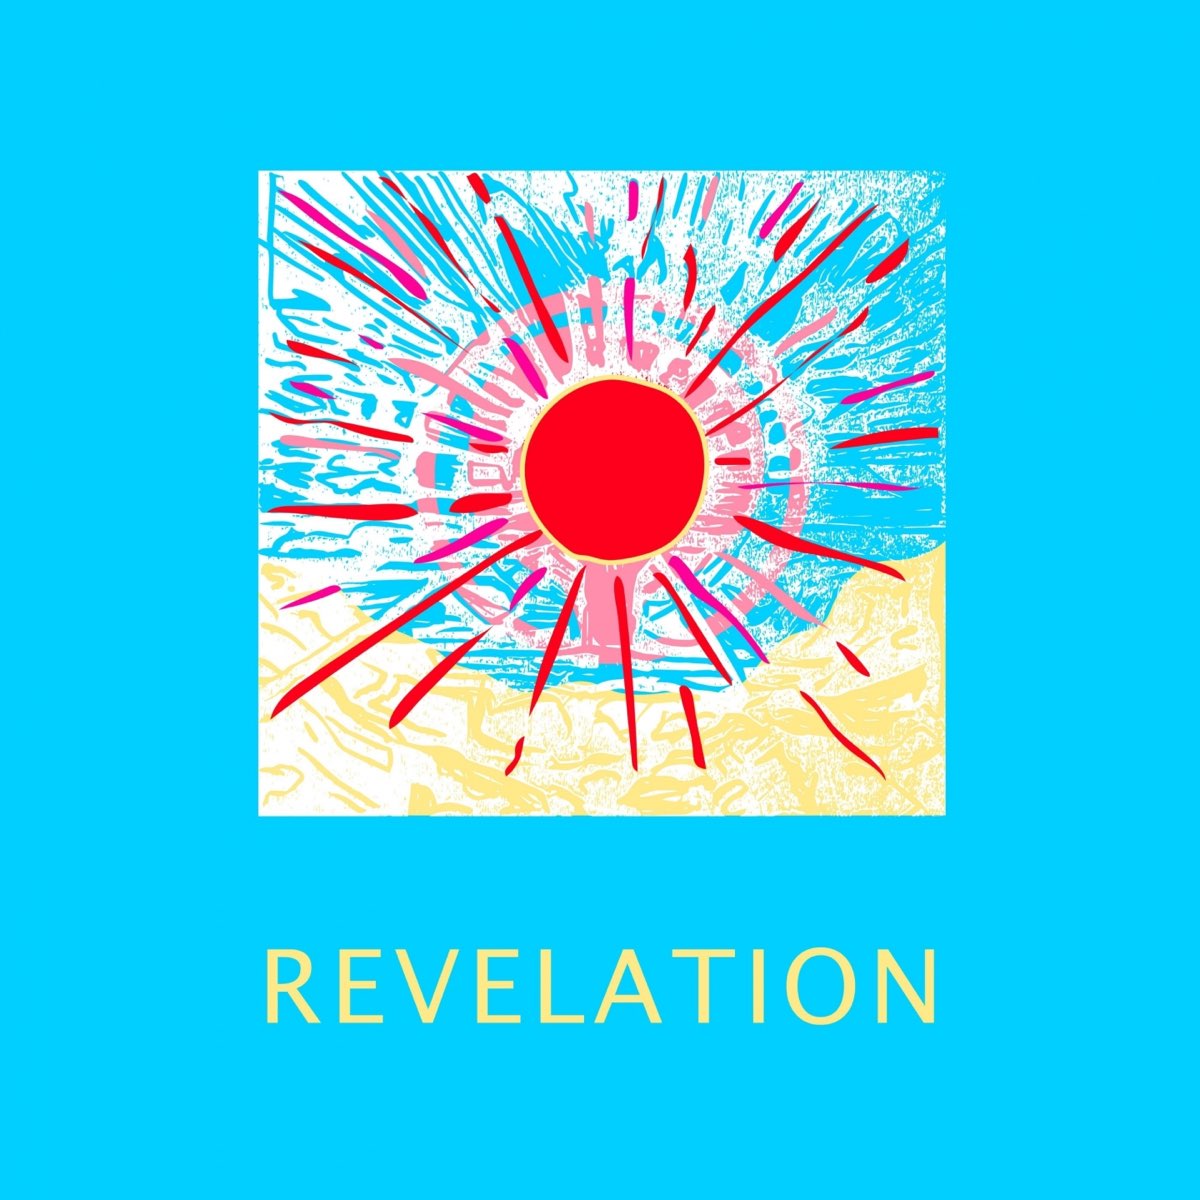 Revelation - Album by Kakkmaddafakka - Apple Music